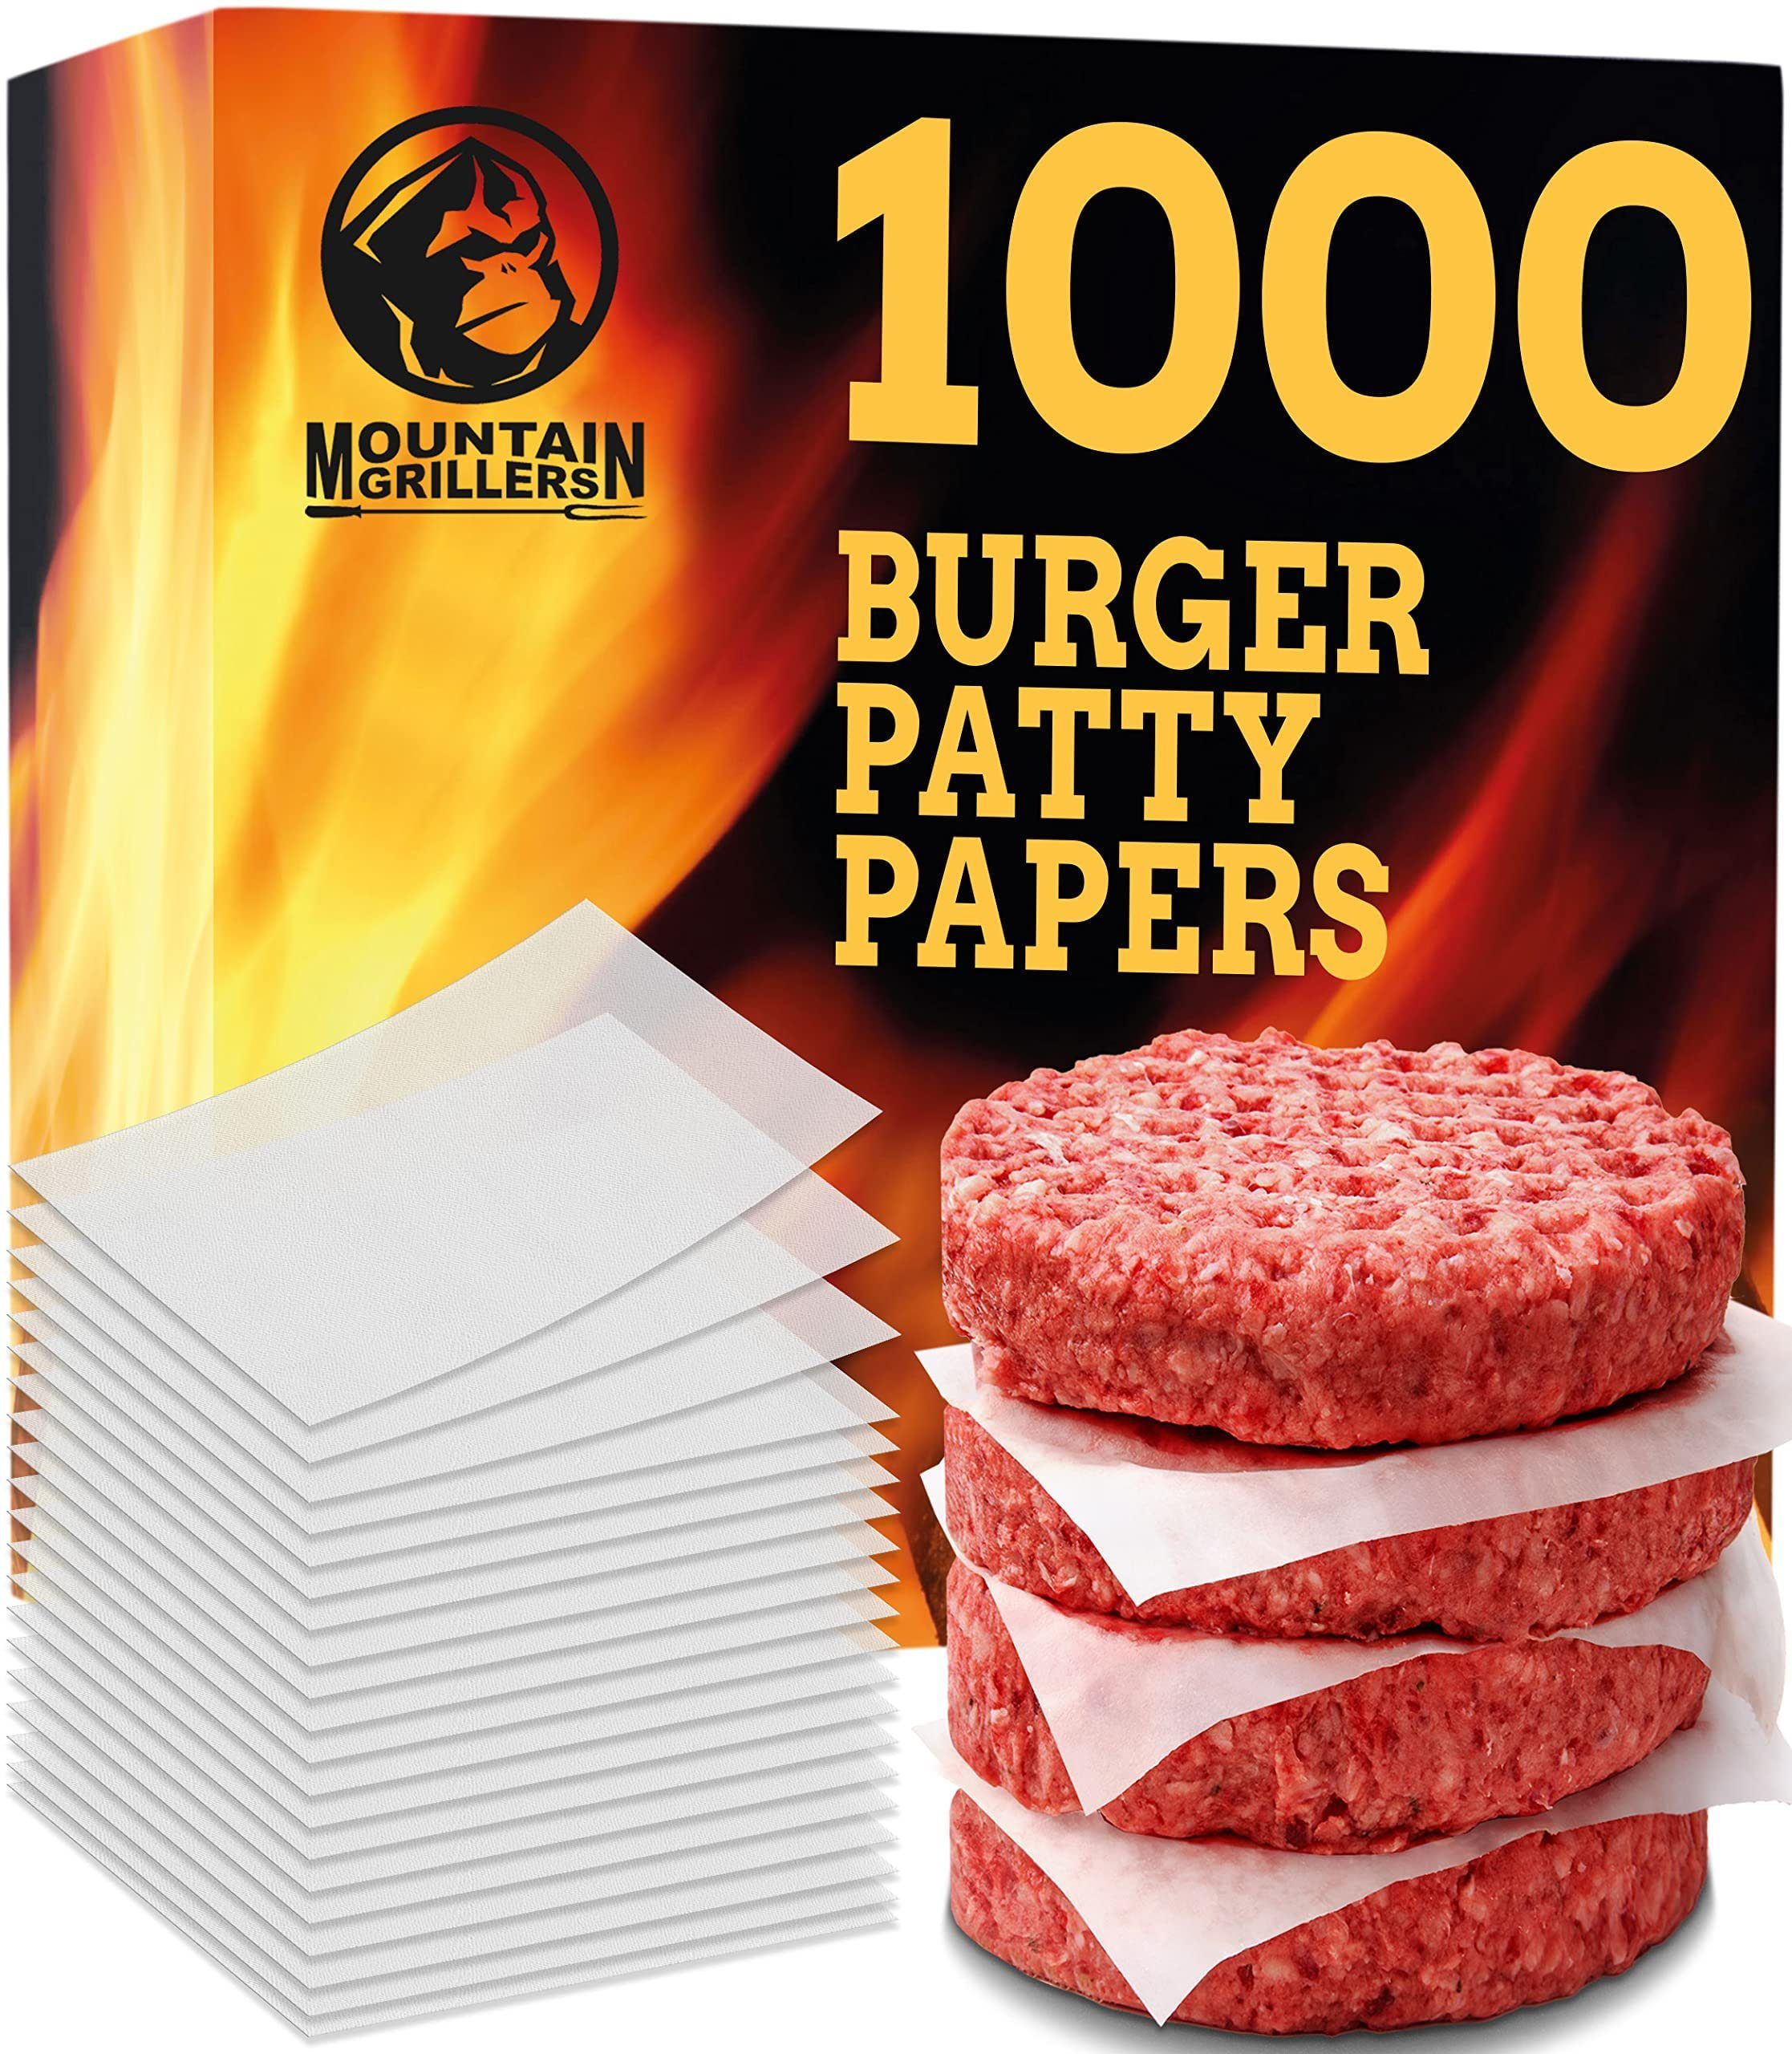 Mountain Grillers Form Antihaftes Papier - Quadratische 115 Wachspapier Blatt Trennpapier Burgerpapier, Paper 1000 Burgerpresse Patty Mit Cm